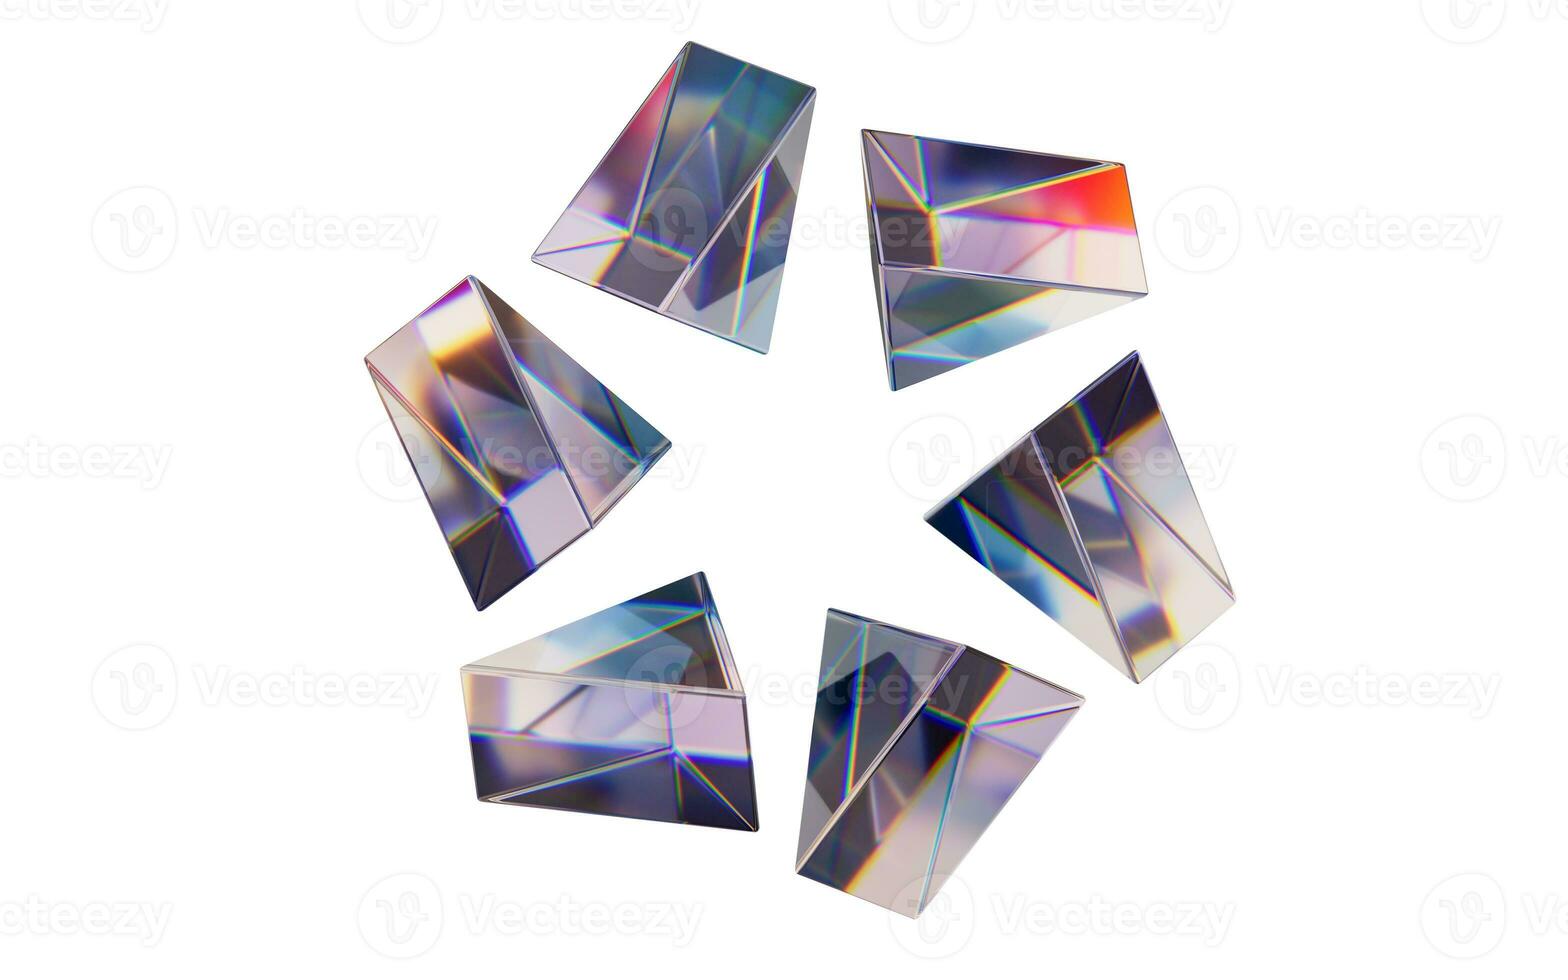 glas geometrieën met spreiding kleuren, 3d weergave. foto